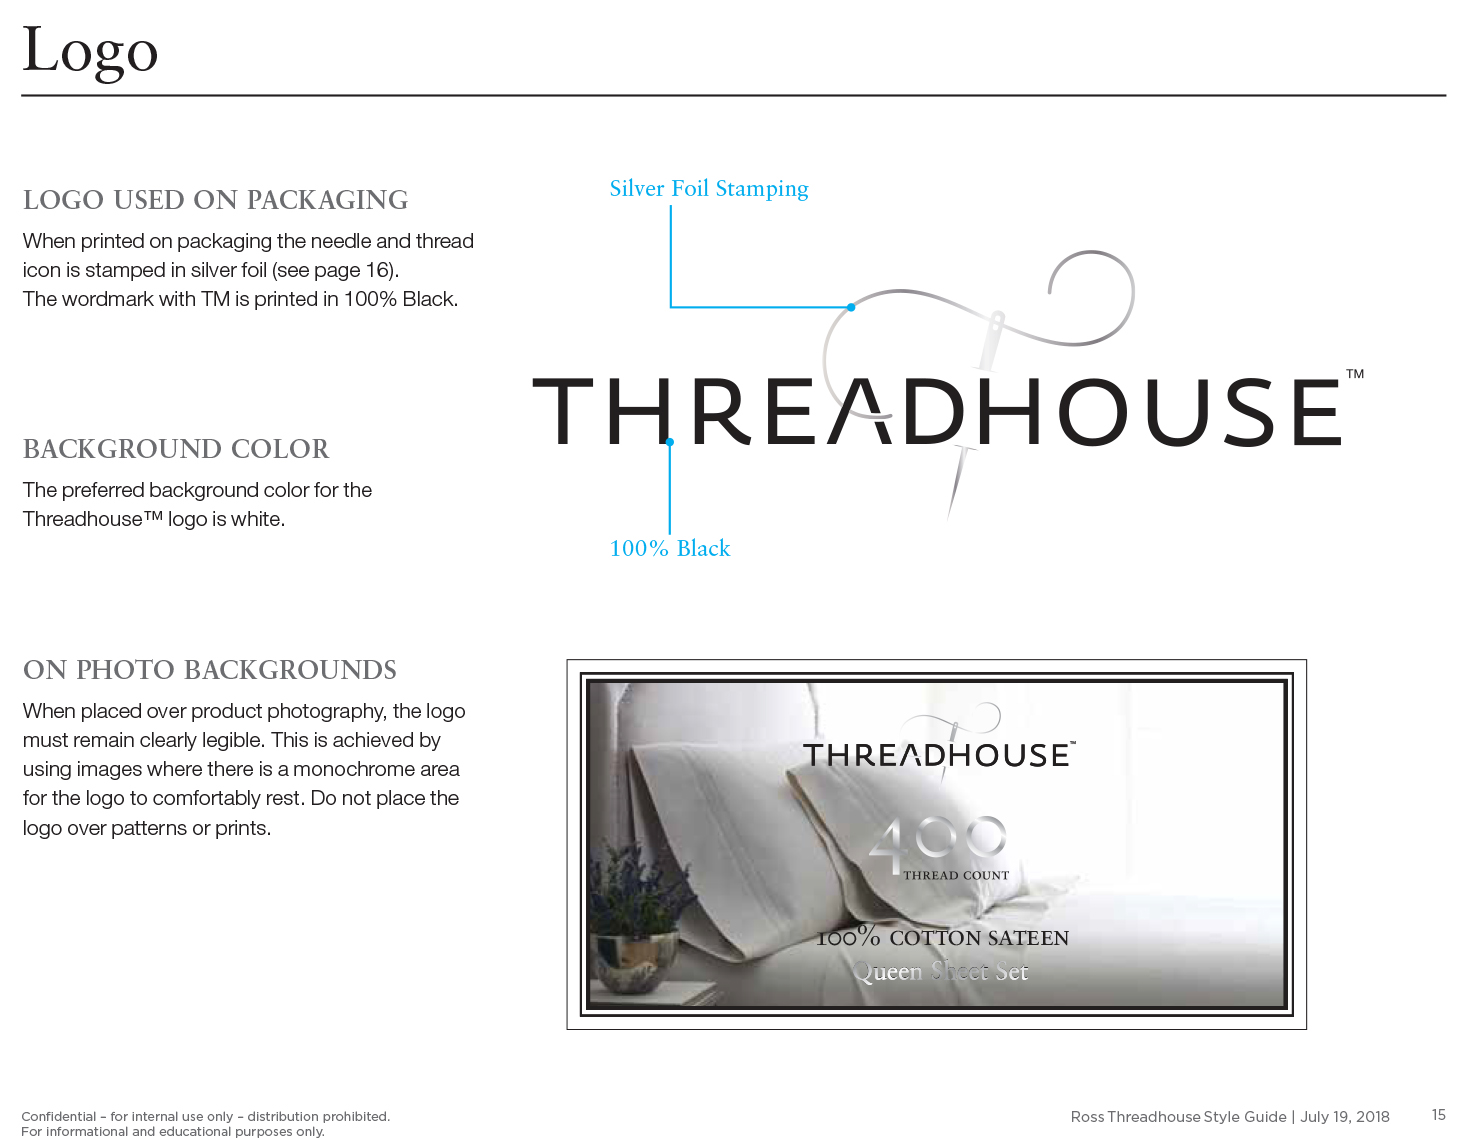 Threadhouse_Style Guide_2.jpg